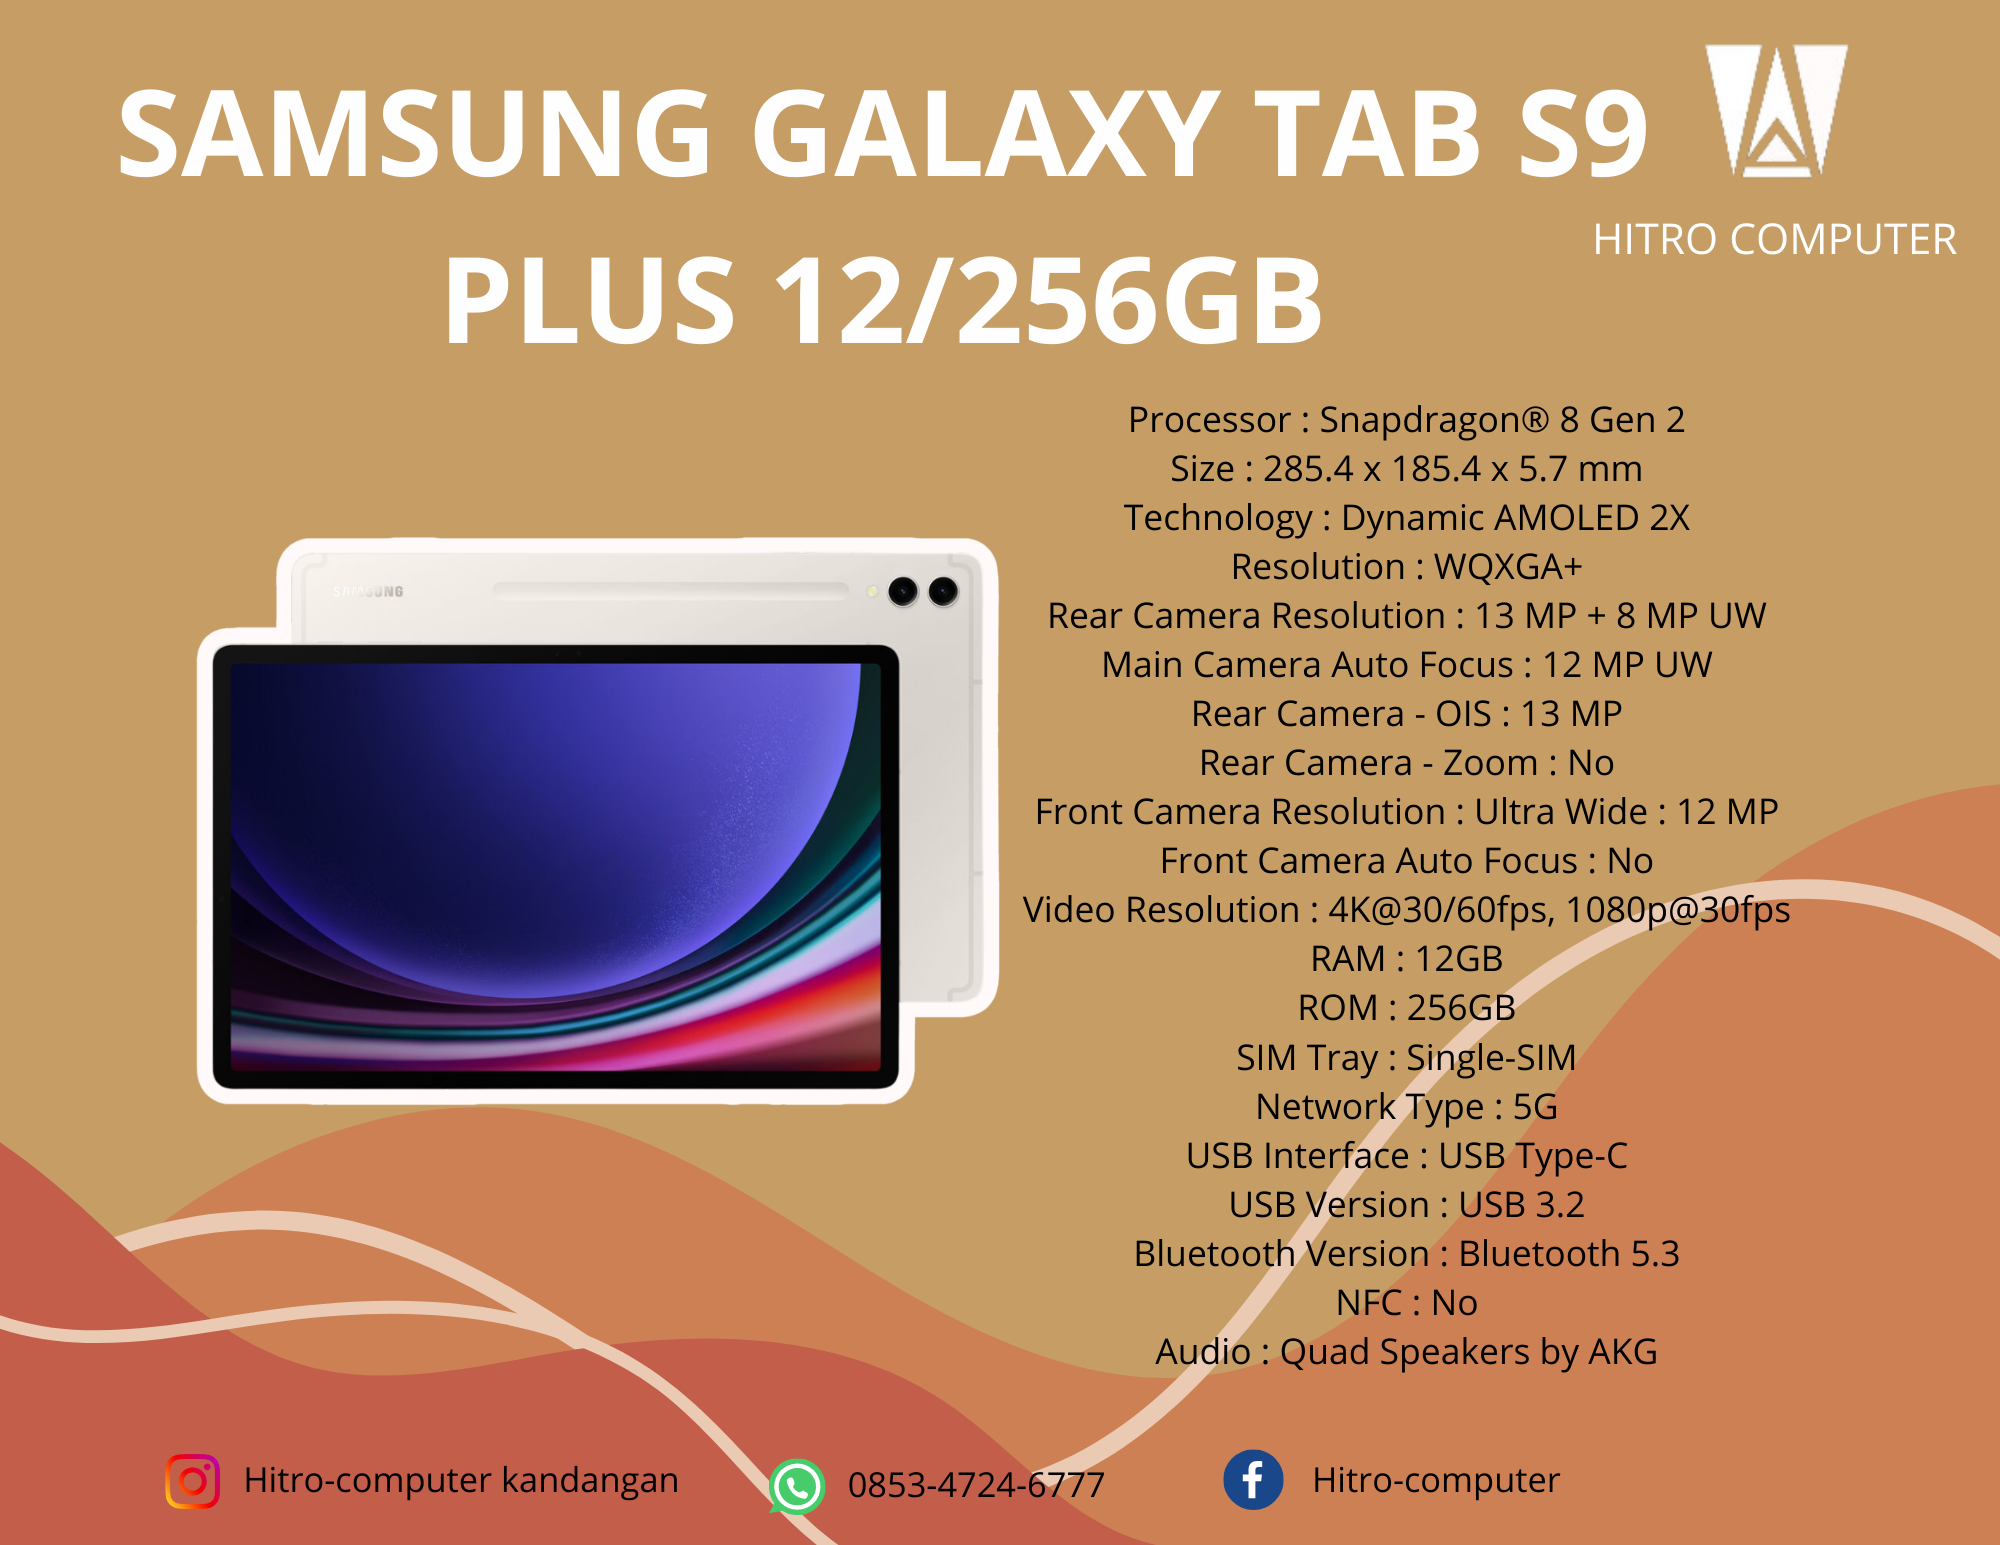 SAMSUNG GALAXY TAB S9 PLUS 12/256GB